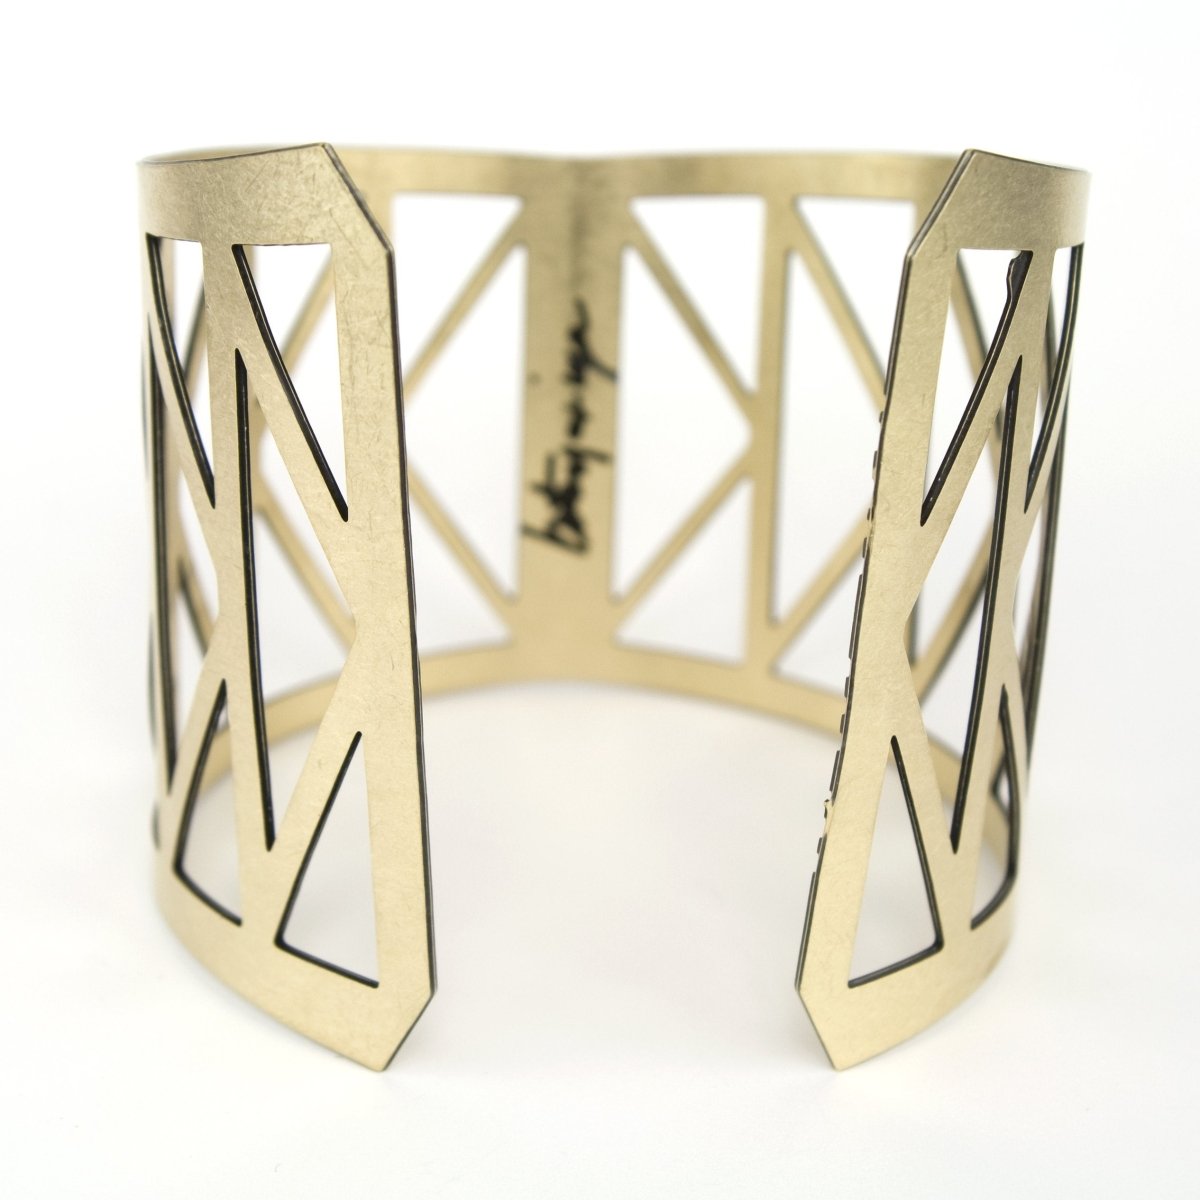 Portland inspired bridge bracelet.  Designed and Made in the USA.